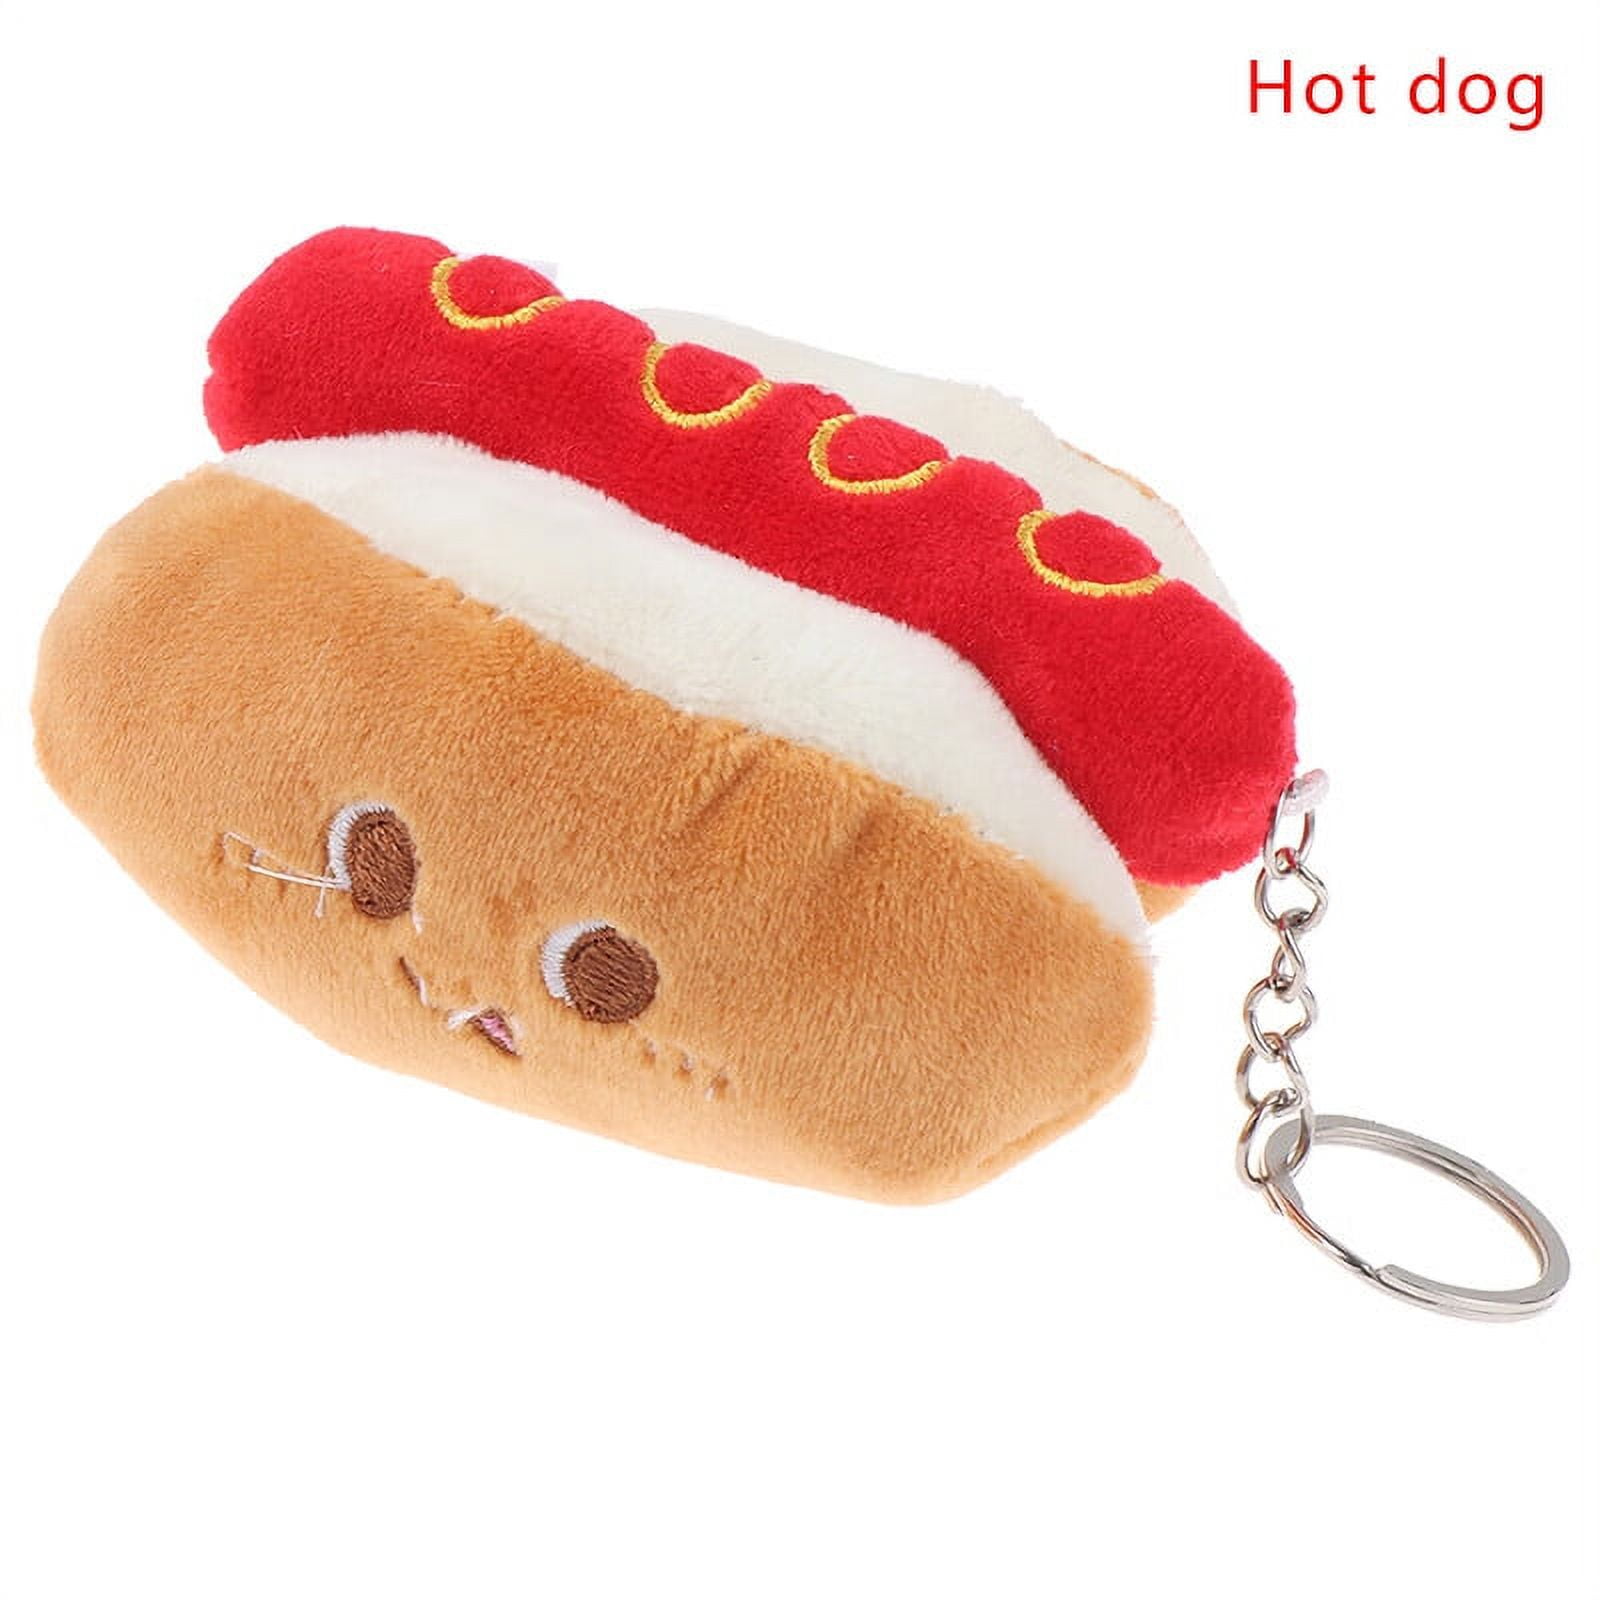 1pc Creative Simulation Food Keychain Pendant, PVC Soft Rubber Hamburger Fries Pizza Hot Dog Toy Keychain Gift,$0.99,Temu